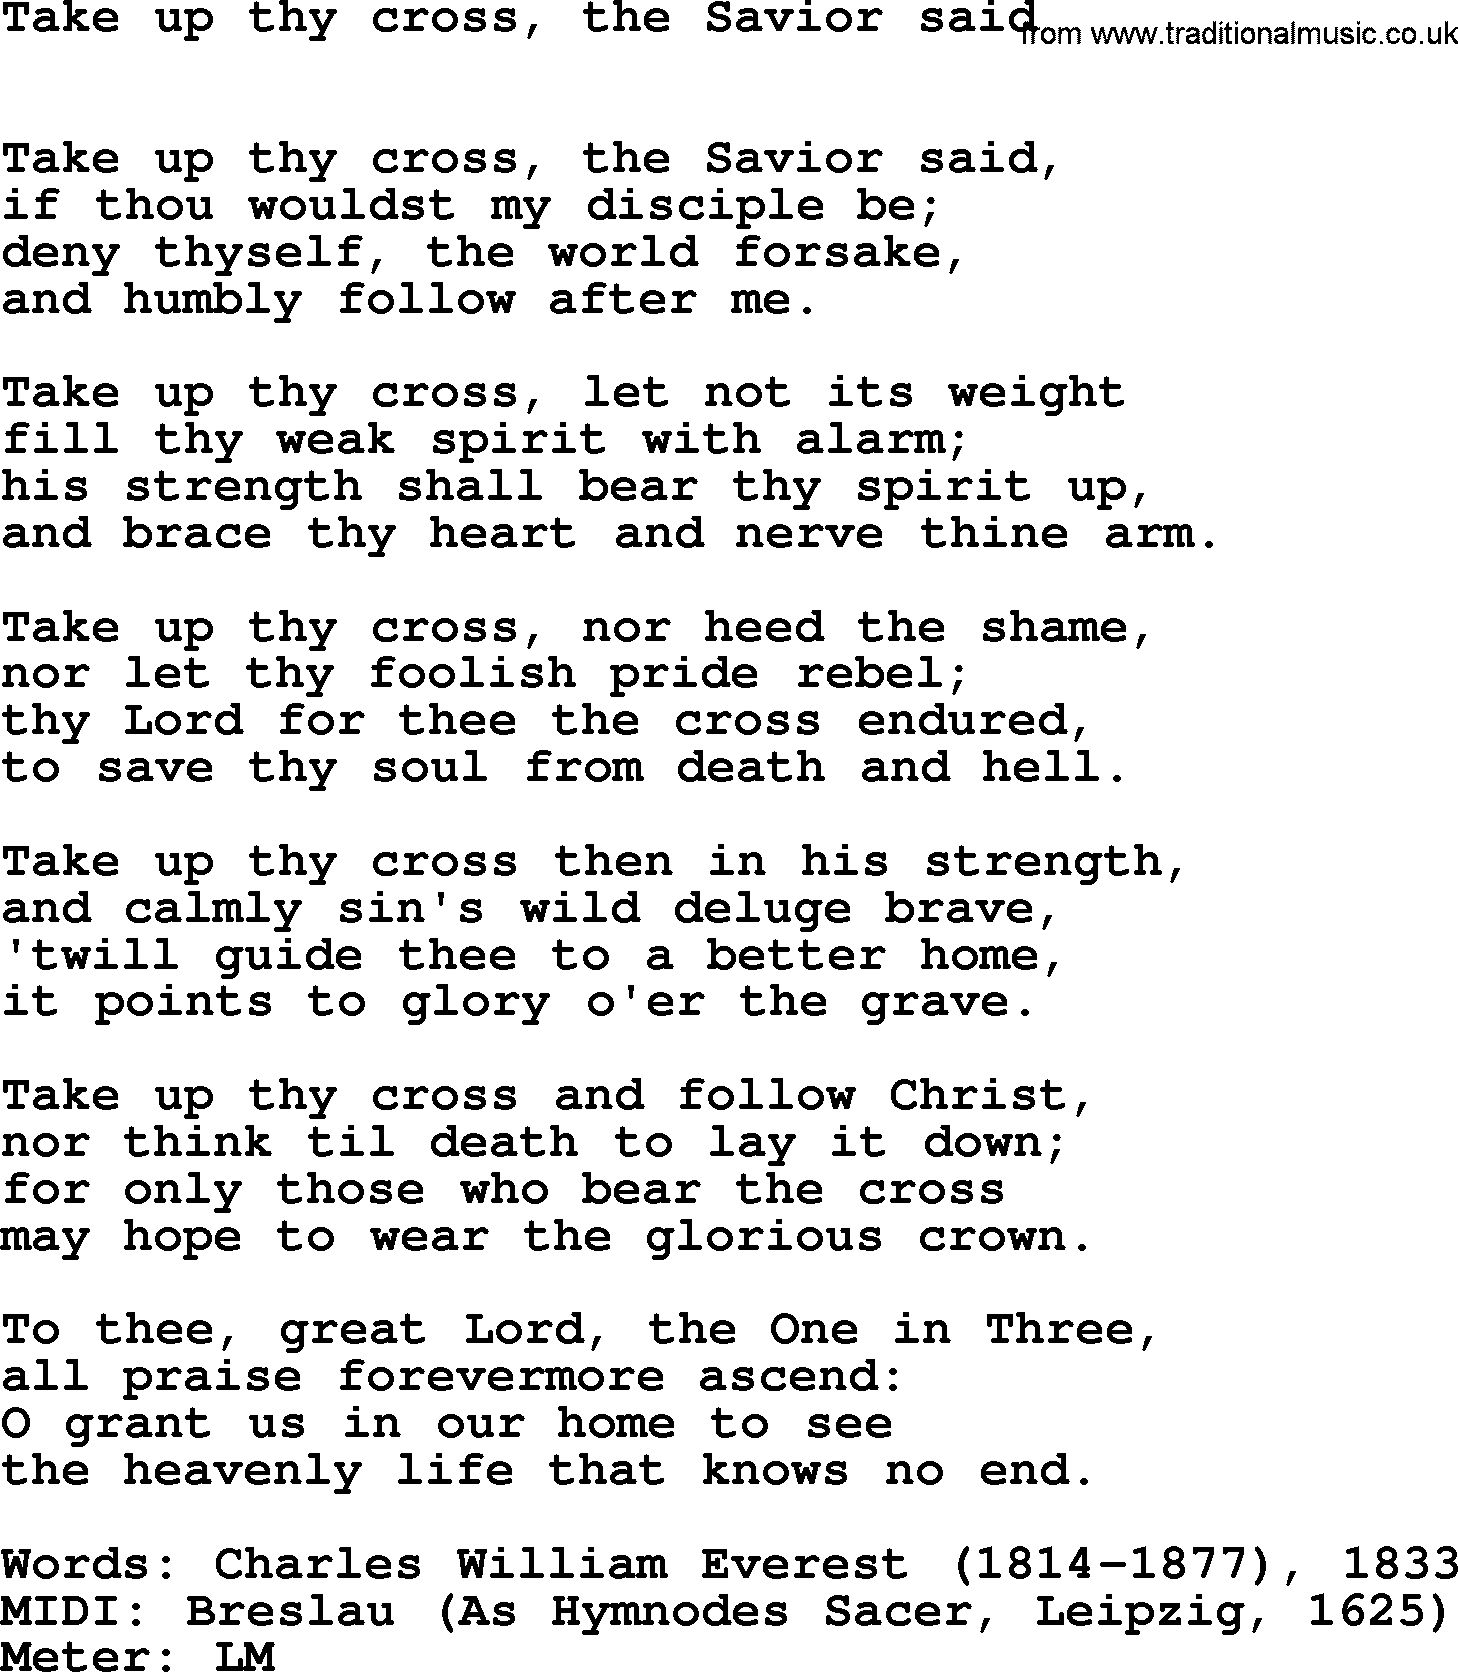 Book of Common Praise Hymn: Take Up Thy Cross, The Savior Said.txt lyrics with midi music